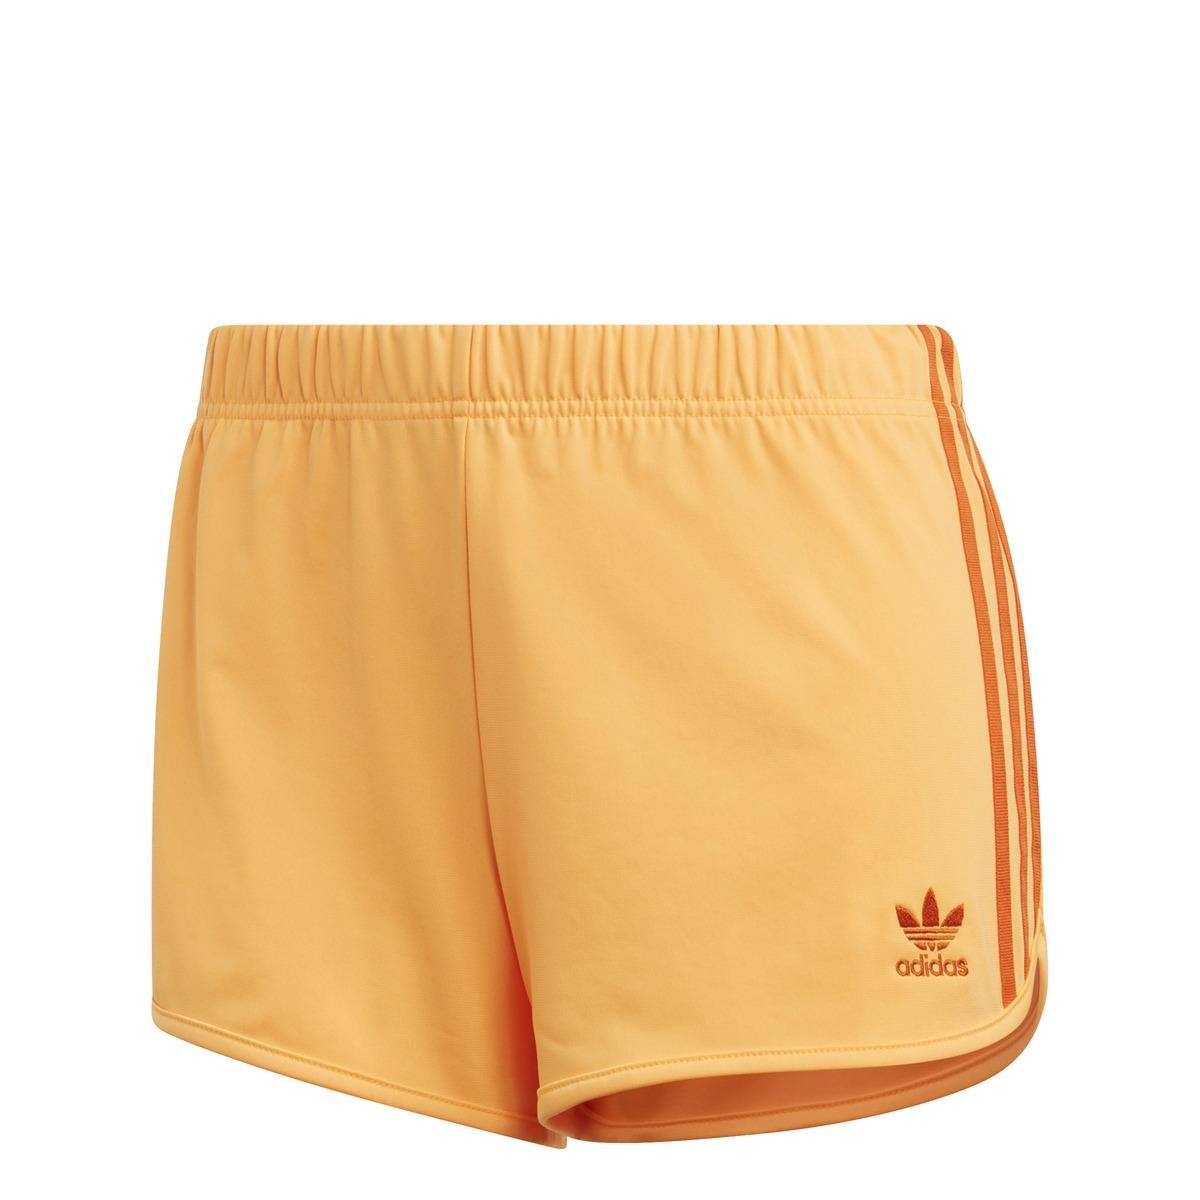 adidas Originals Synthetic 3 Stripes Shorts in Orange - Lyst